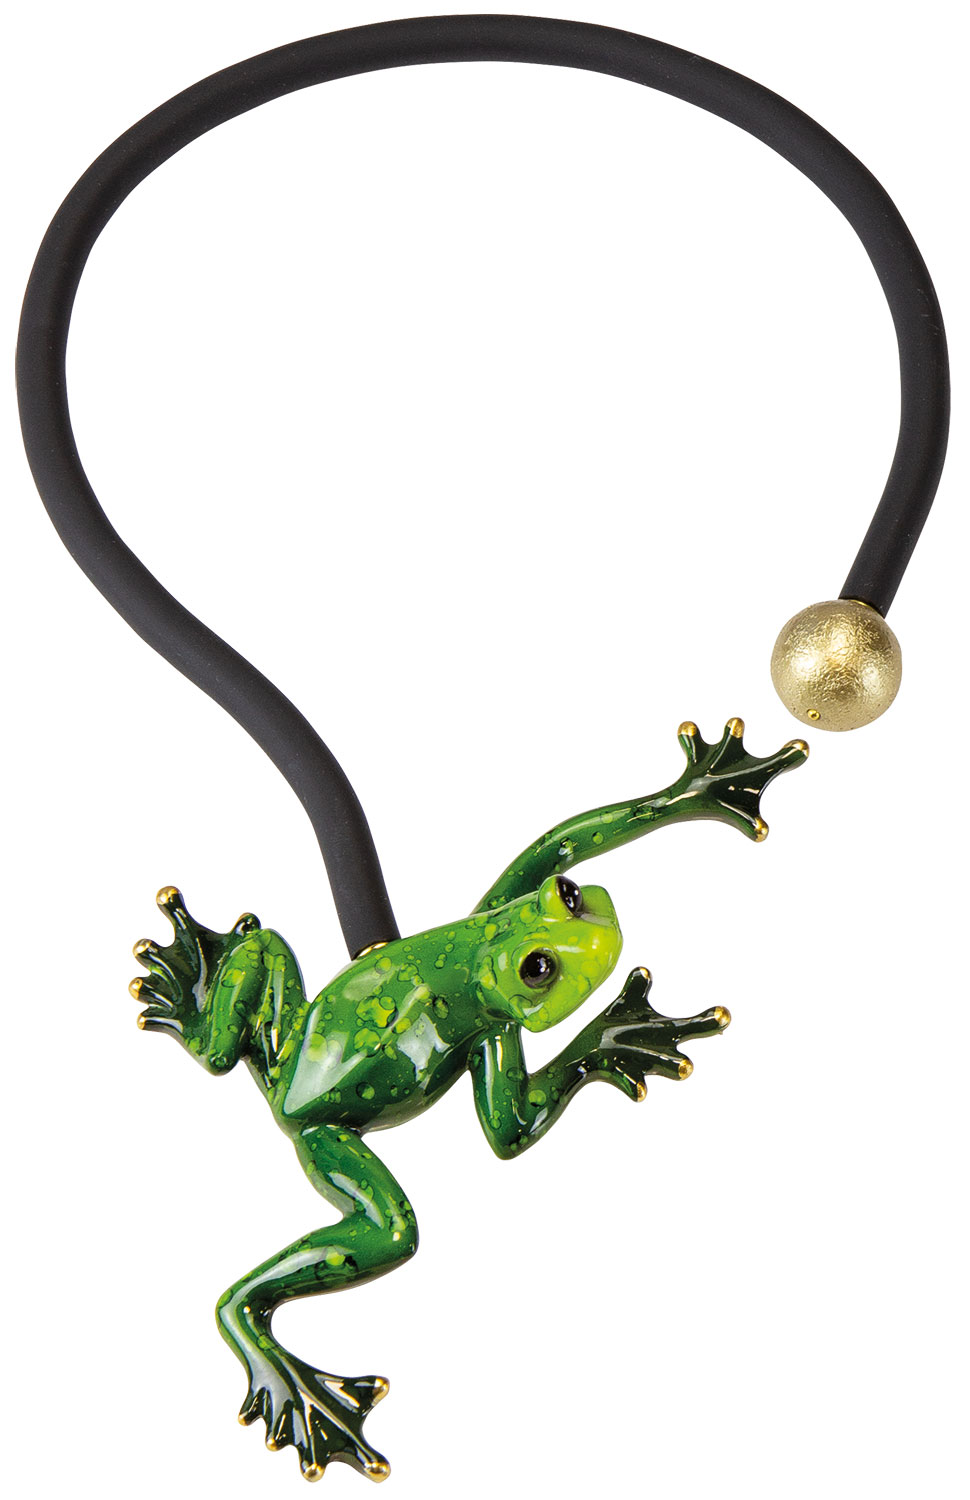 Necklace "Frog" by Anna Mütz